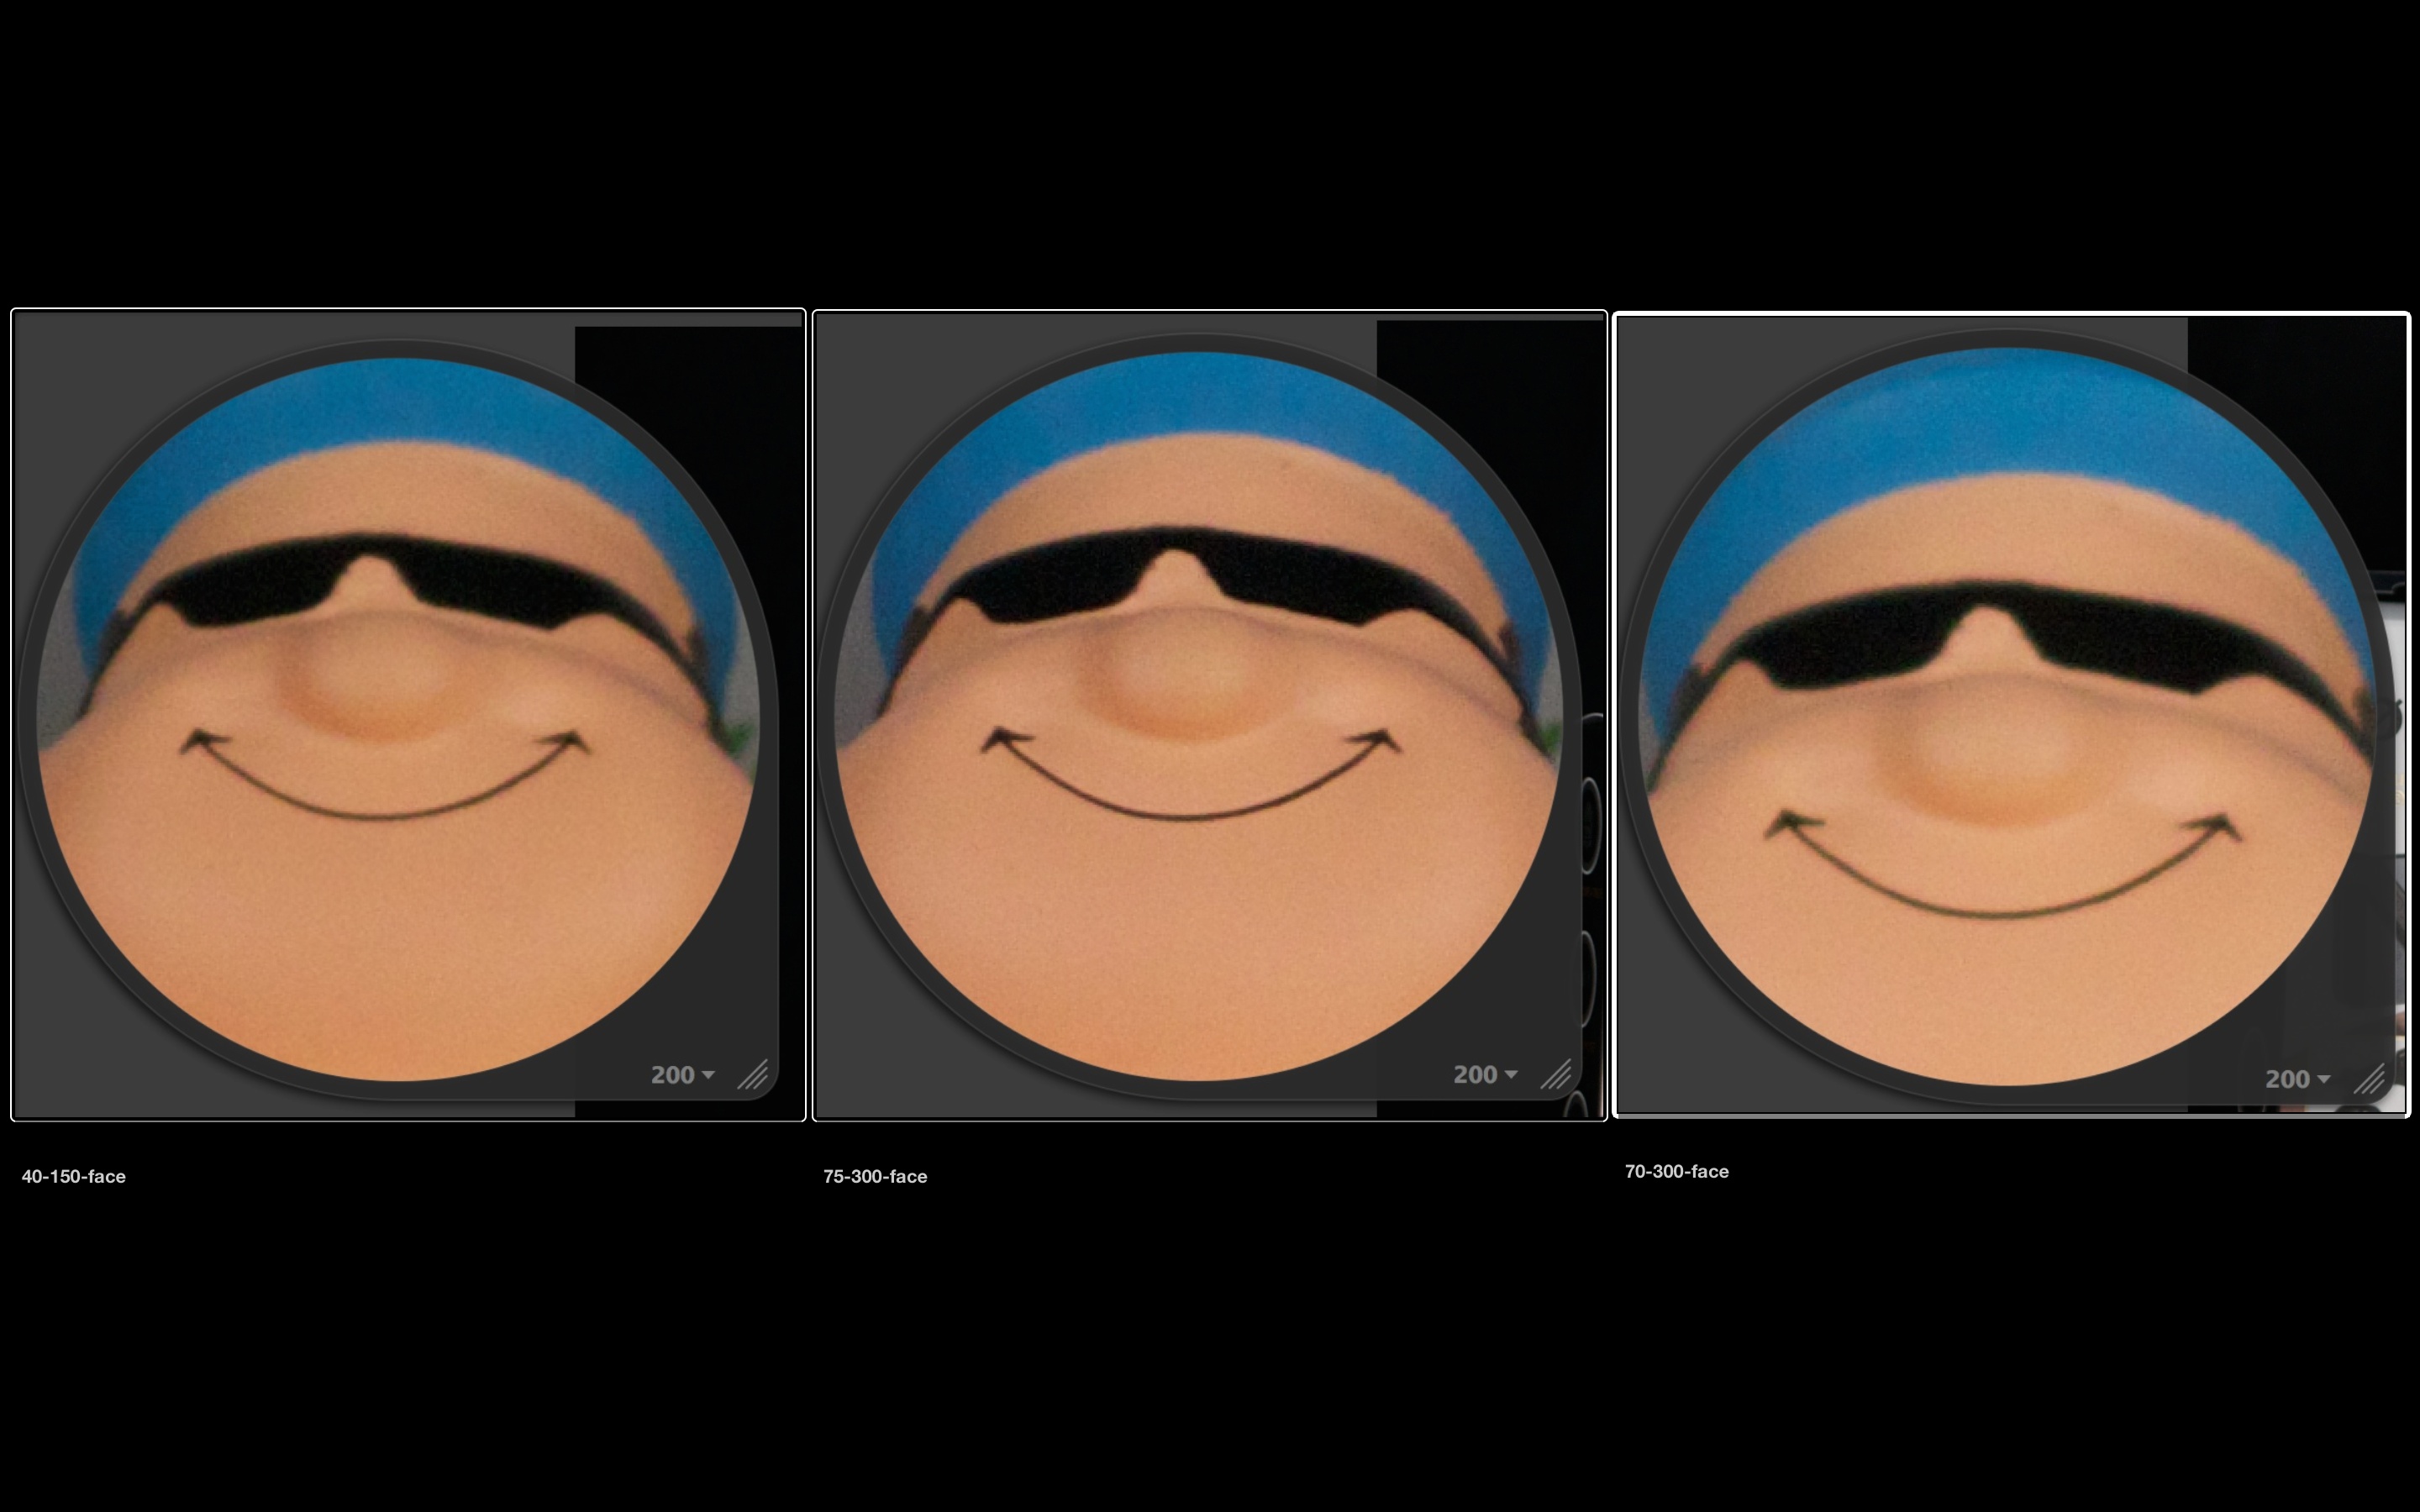 http://thedigitalstory.com/2014/07/27/face-comparison-test.jpg